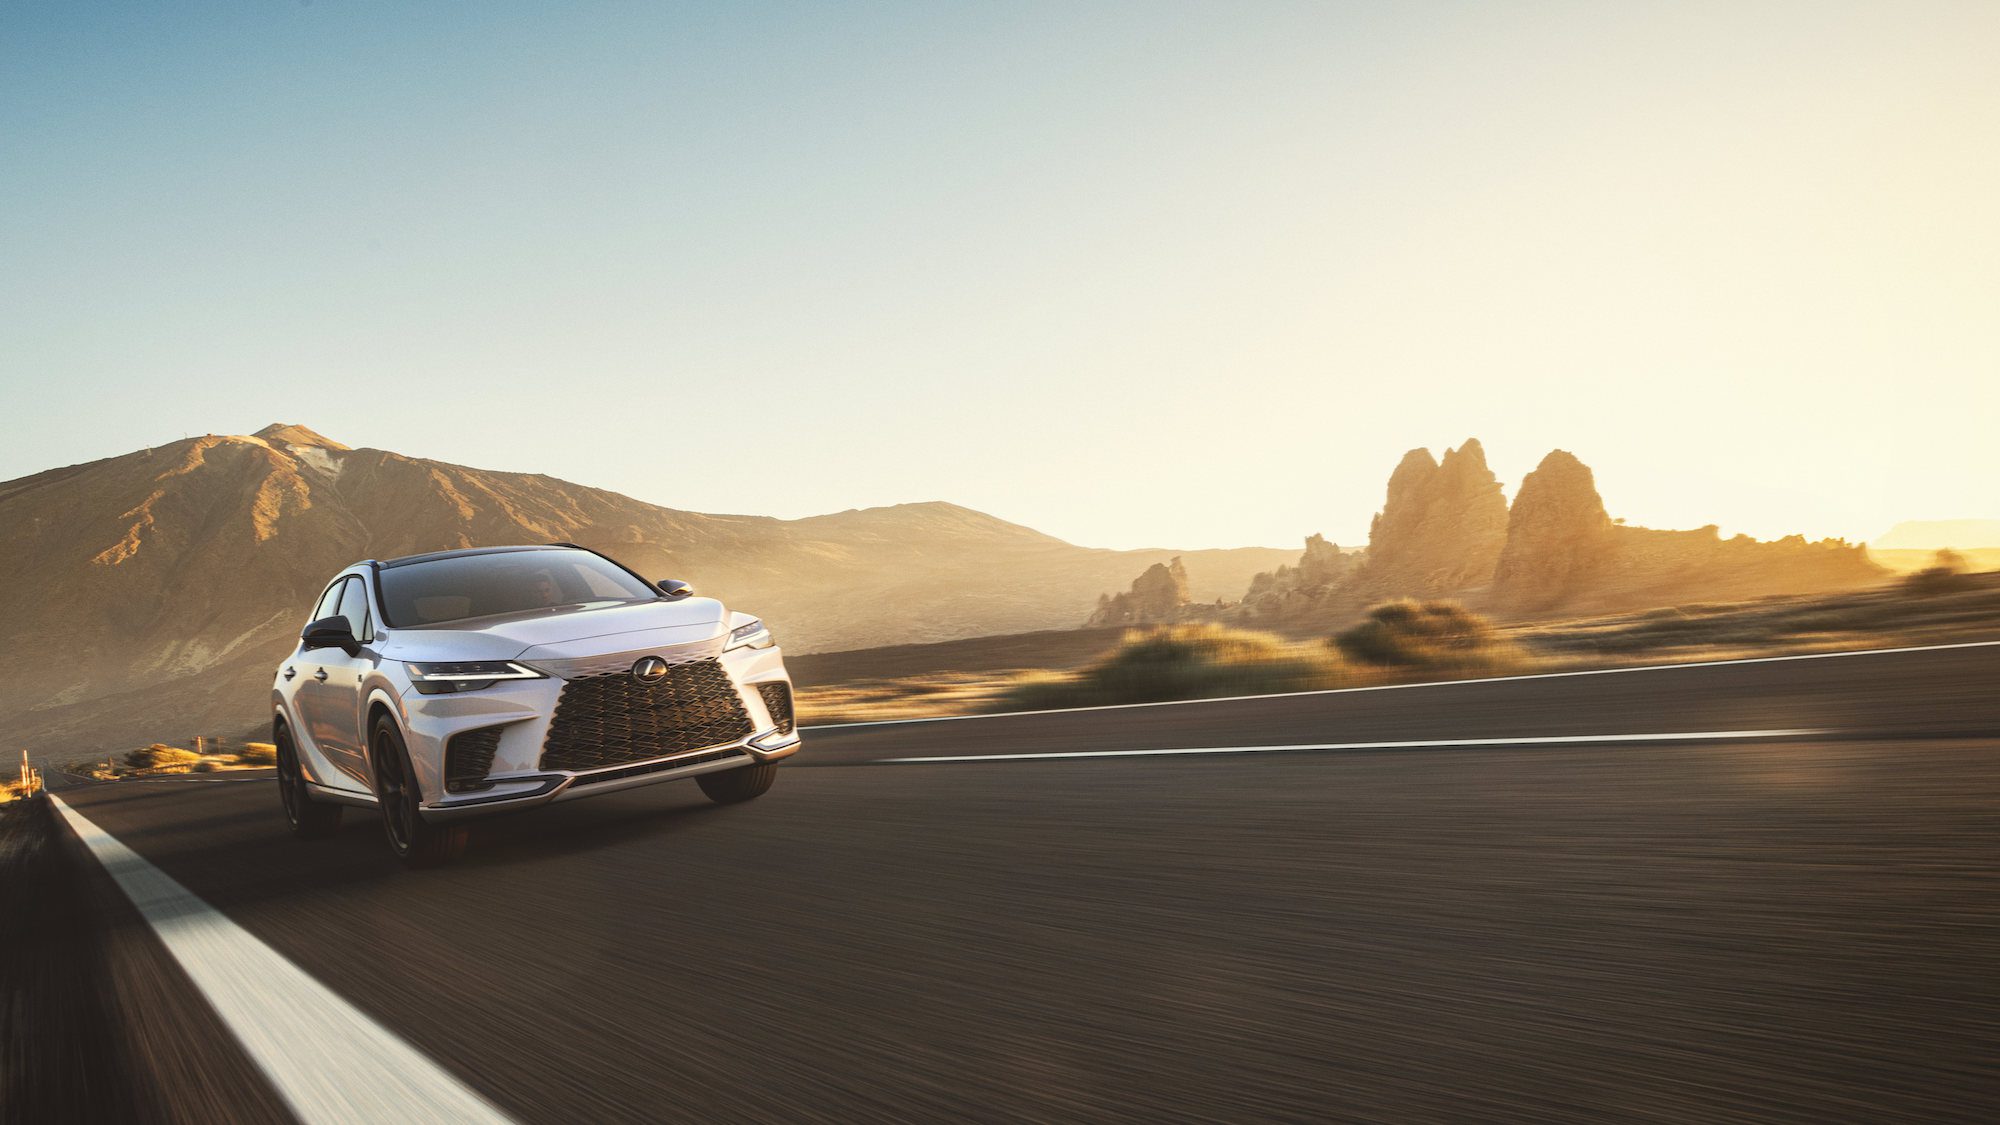 The next generation: Test driving the Lexus RX Hybrid range